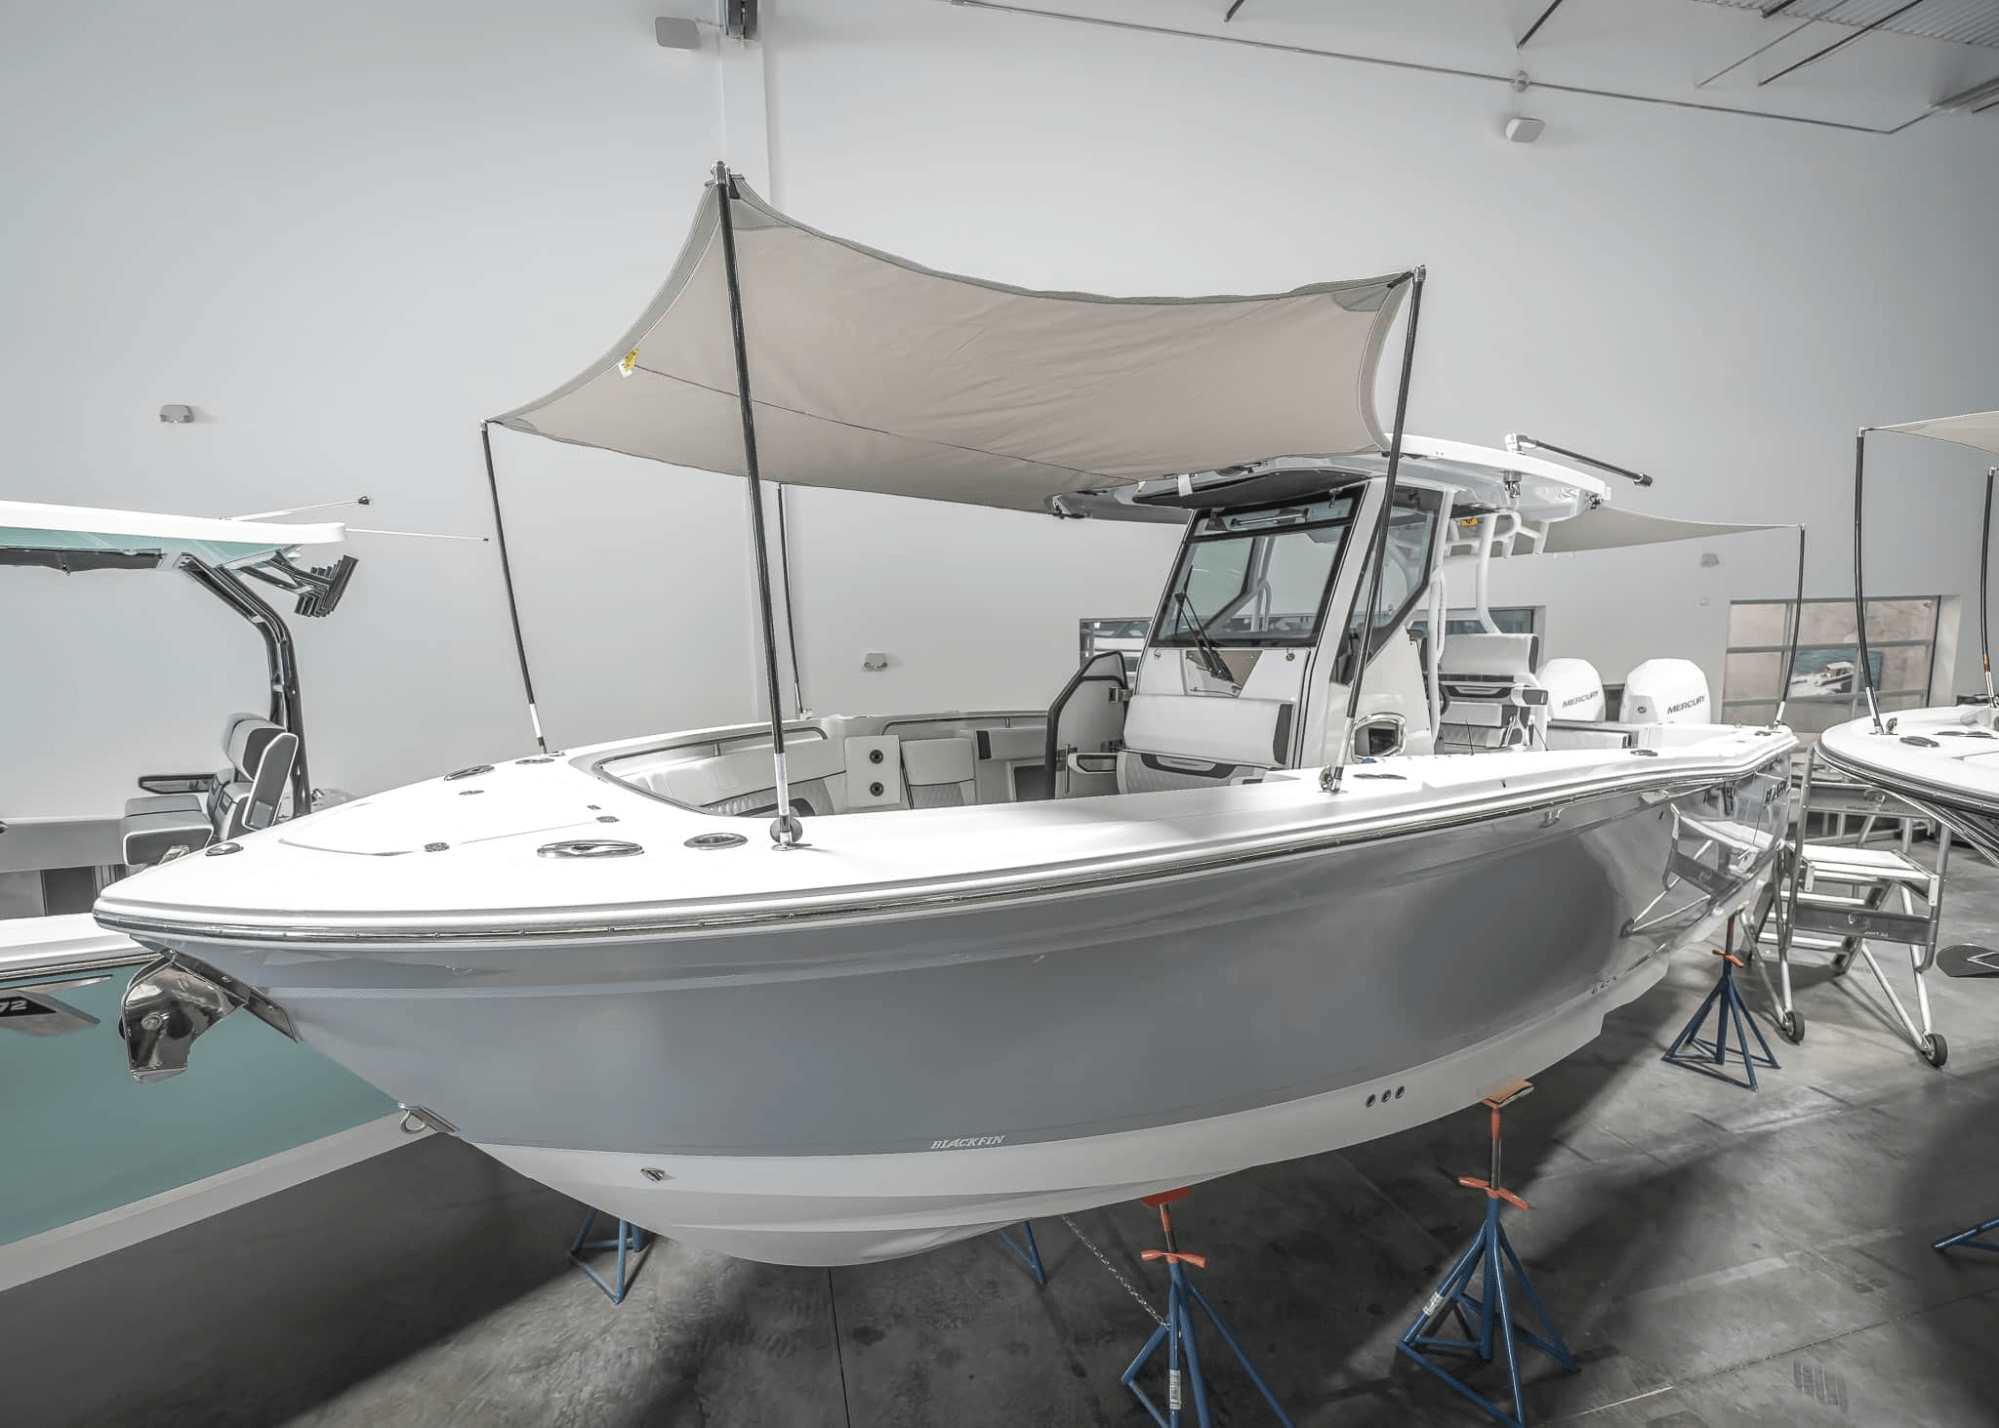 Blackfin 302CC luxurious boat model